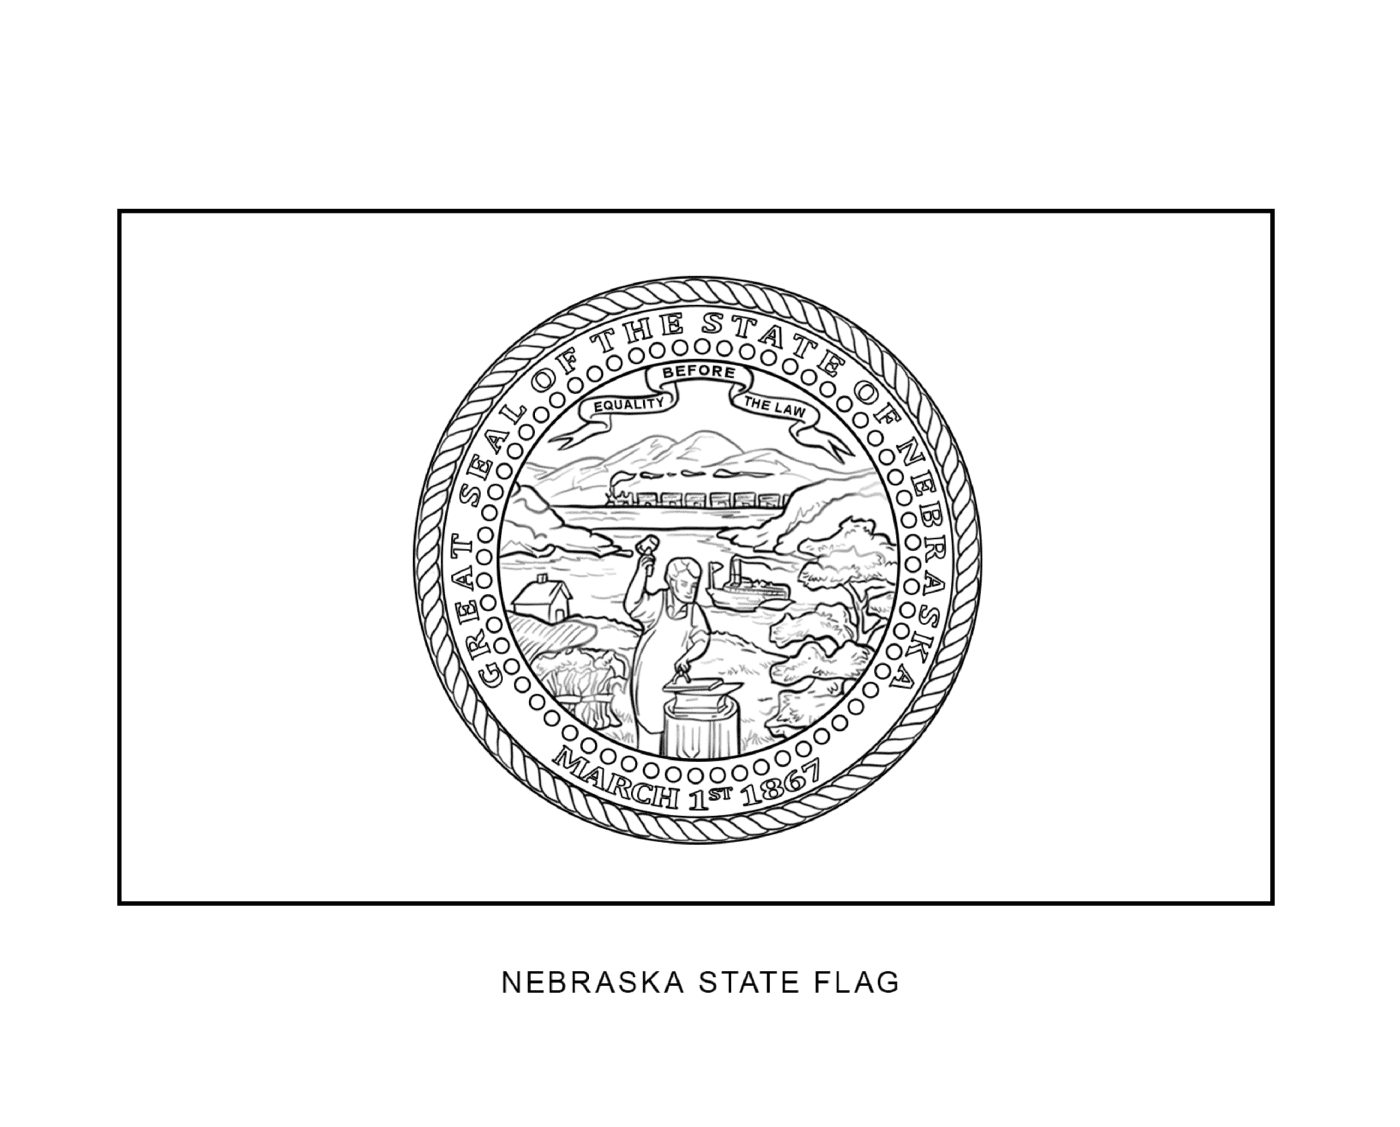  Nebraska State Flag in black and white 